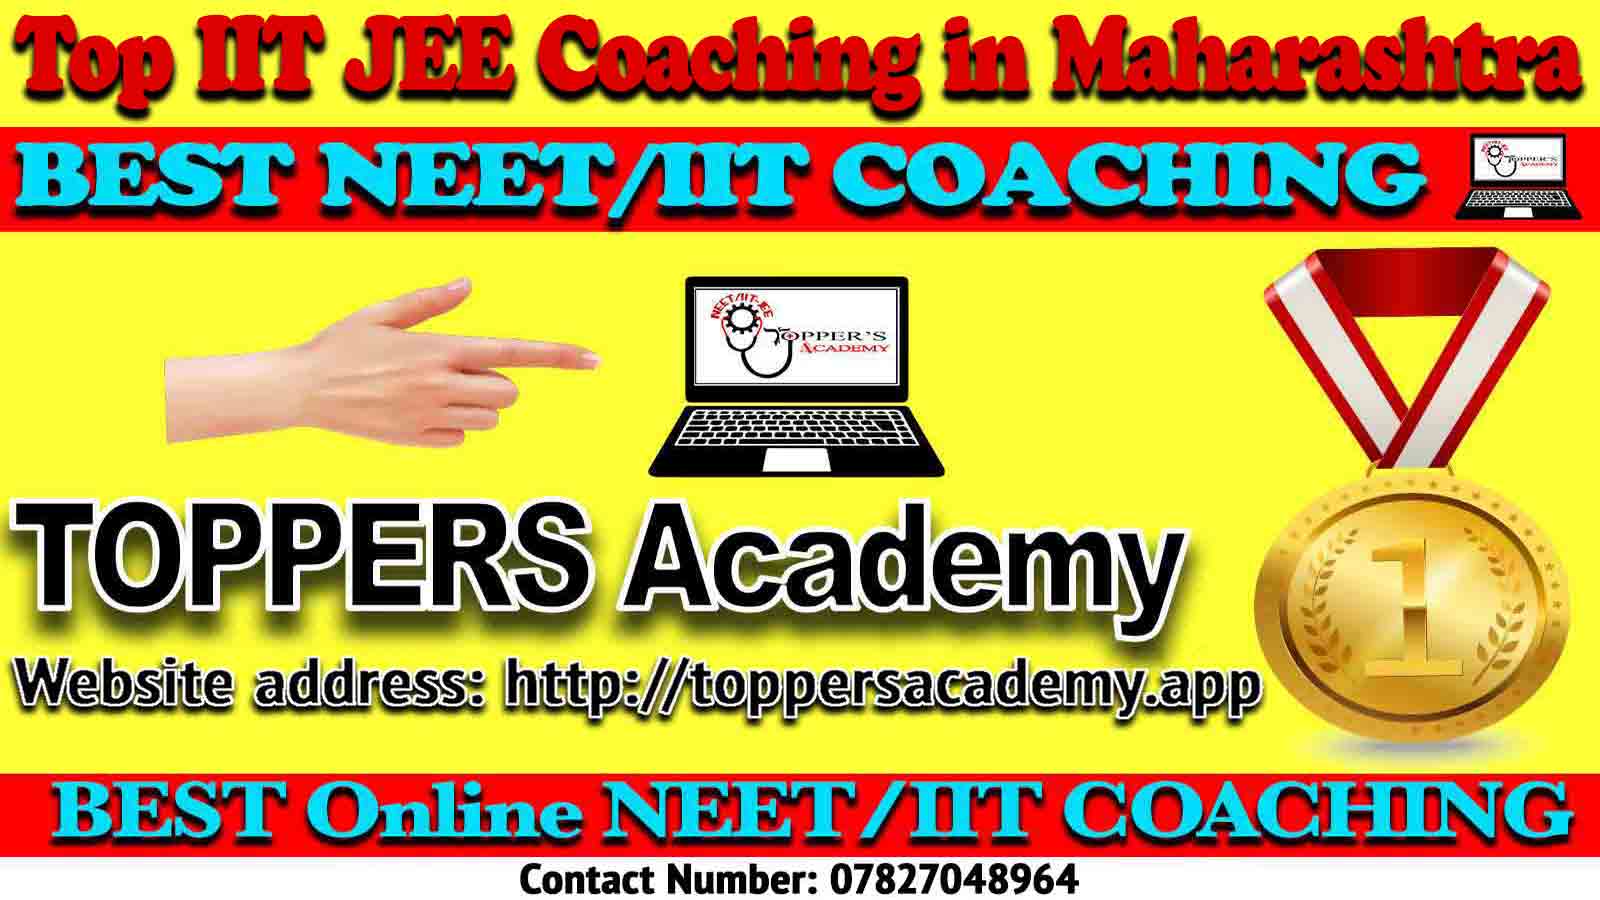 Top IIT JEE Coaching in Maharashtra